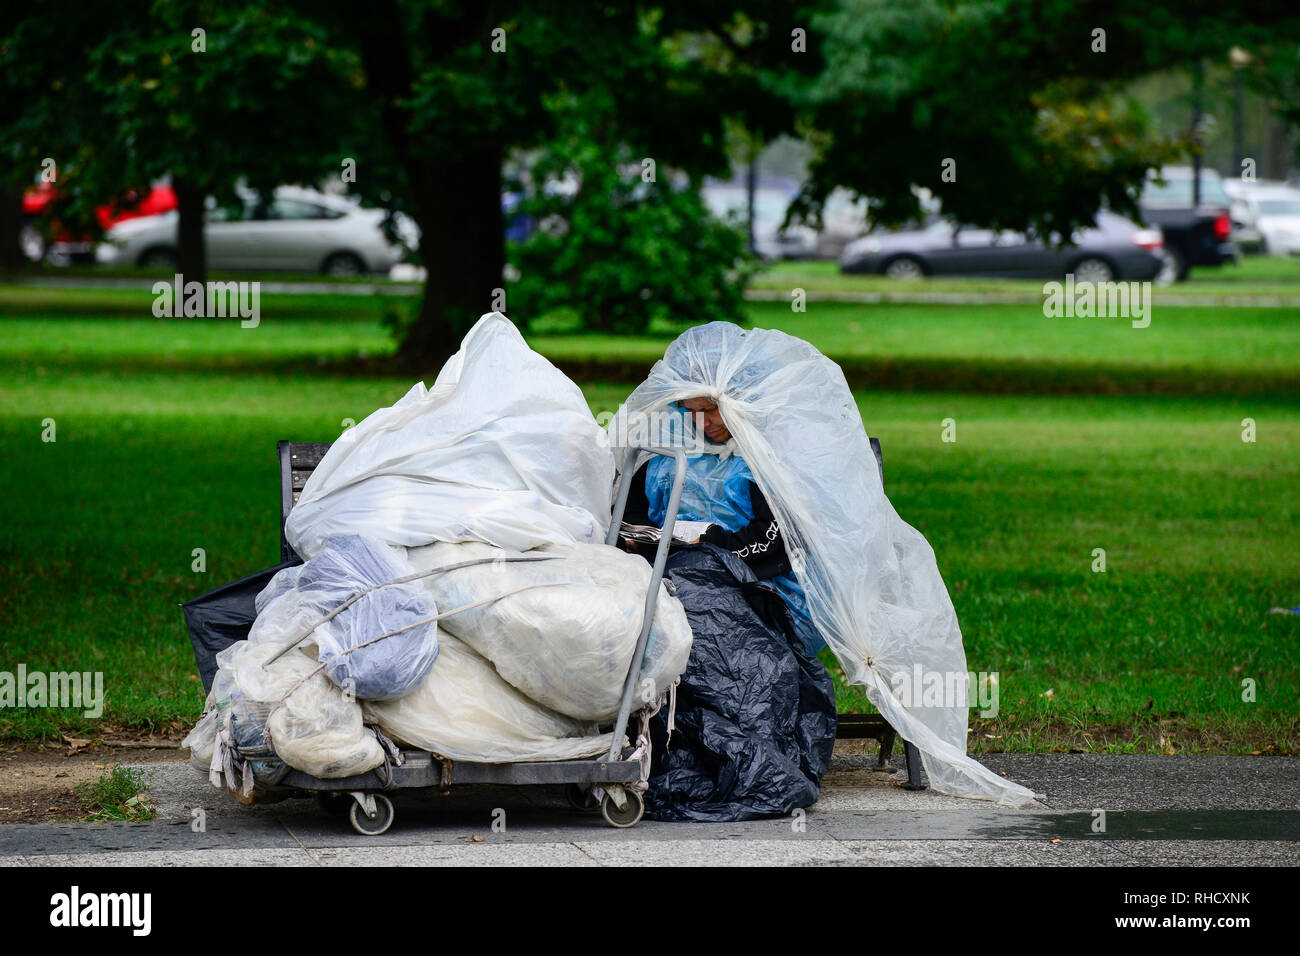 USA, Washington DC, homeless woman in park near White House / USA, Washington DC, obdachlose Frau im Park beim  weissen Haus Stock Photo